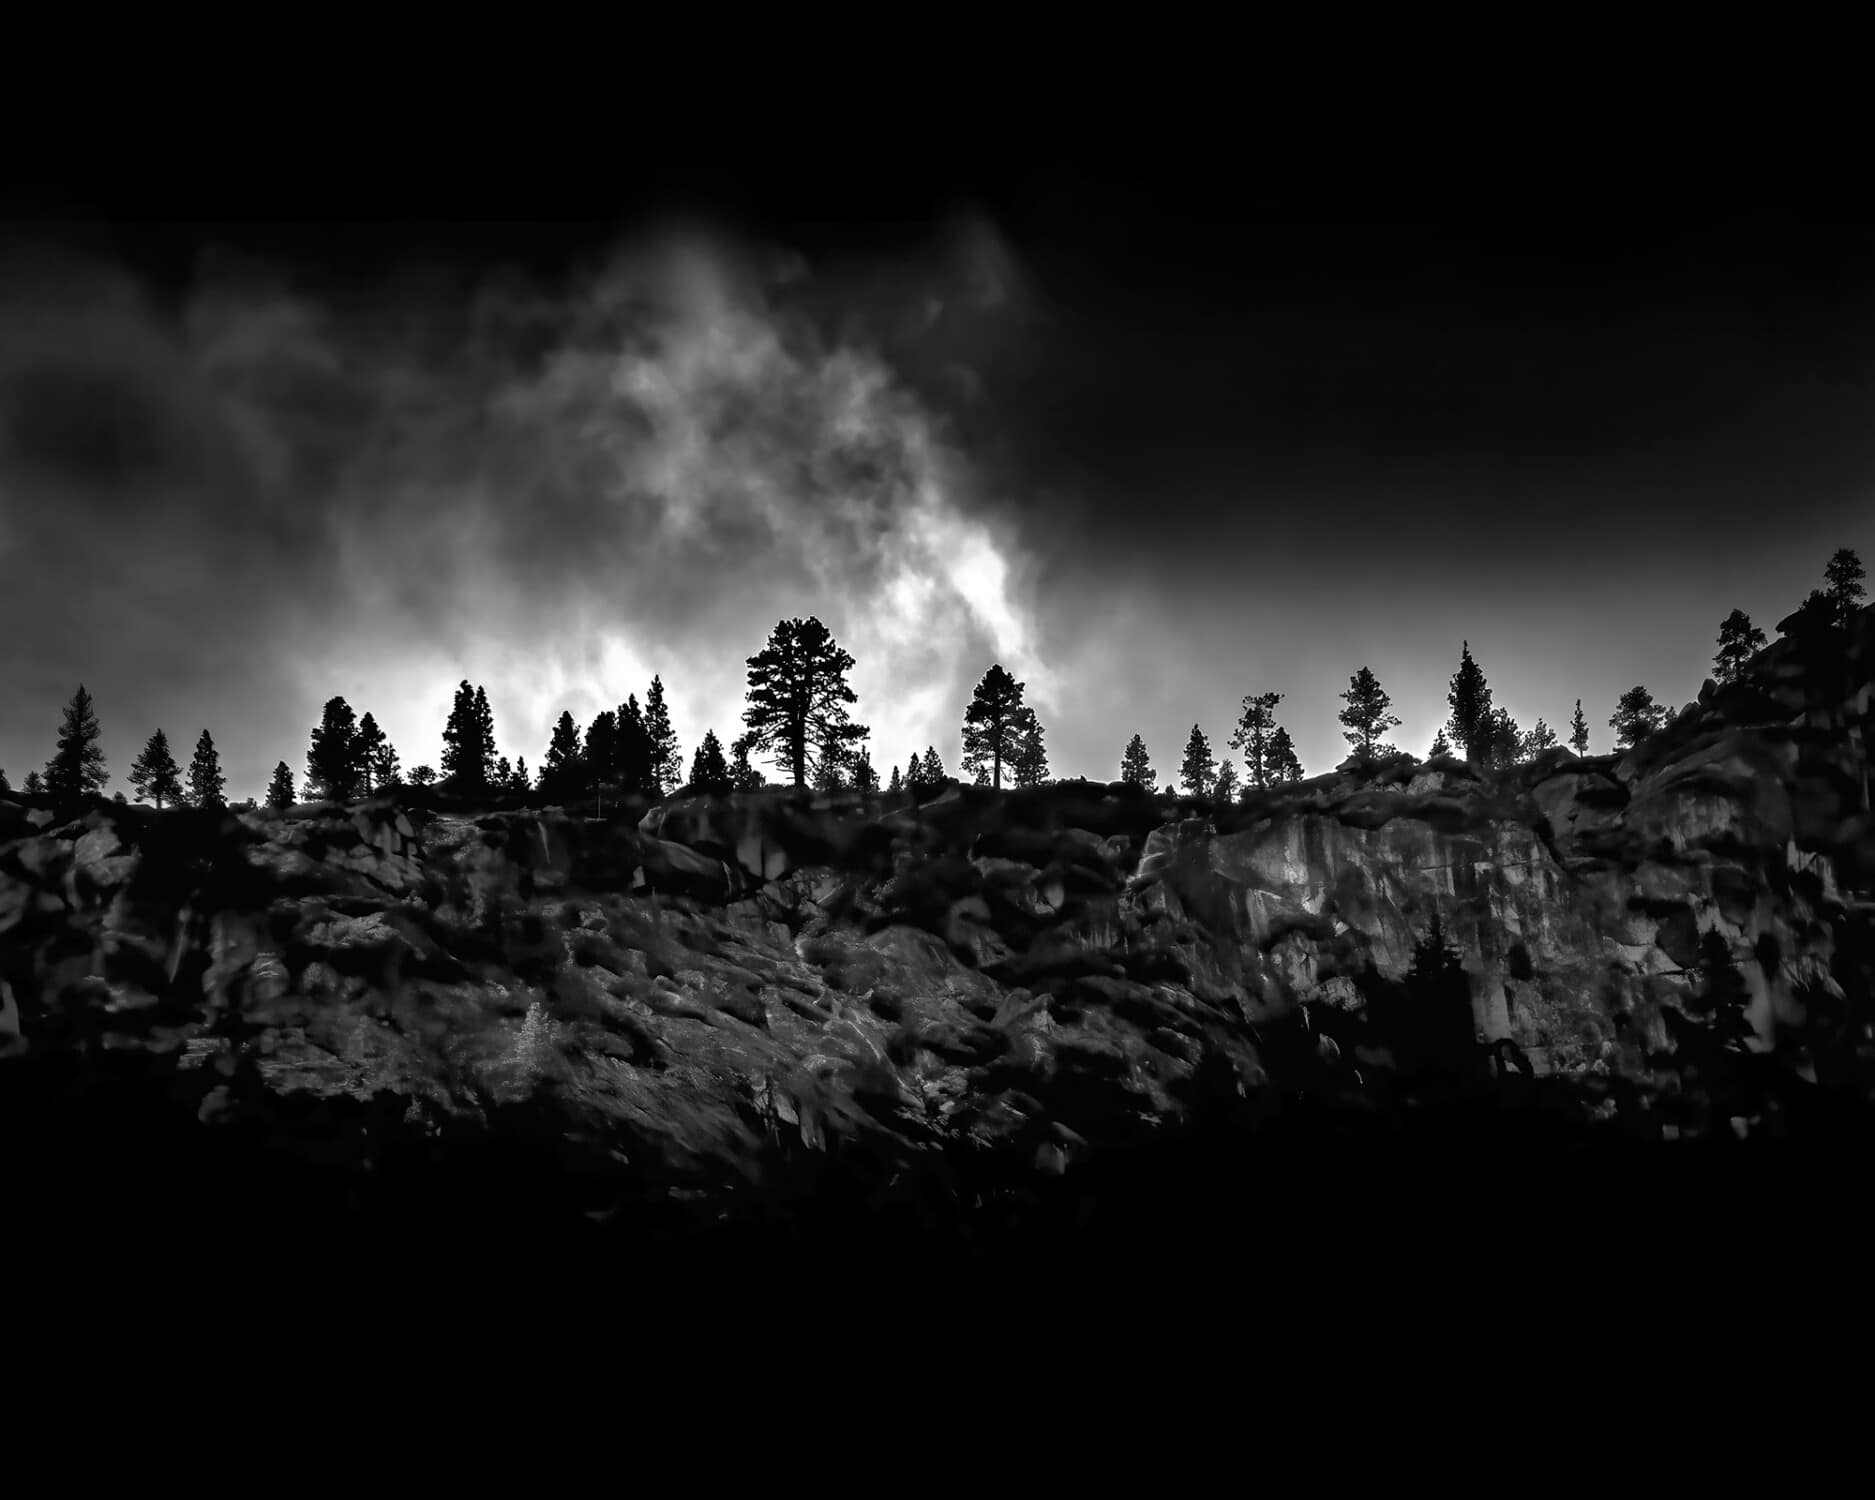 Trees along the ridgeline in Yosemite